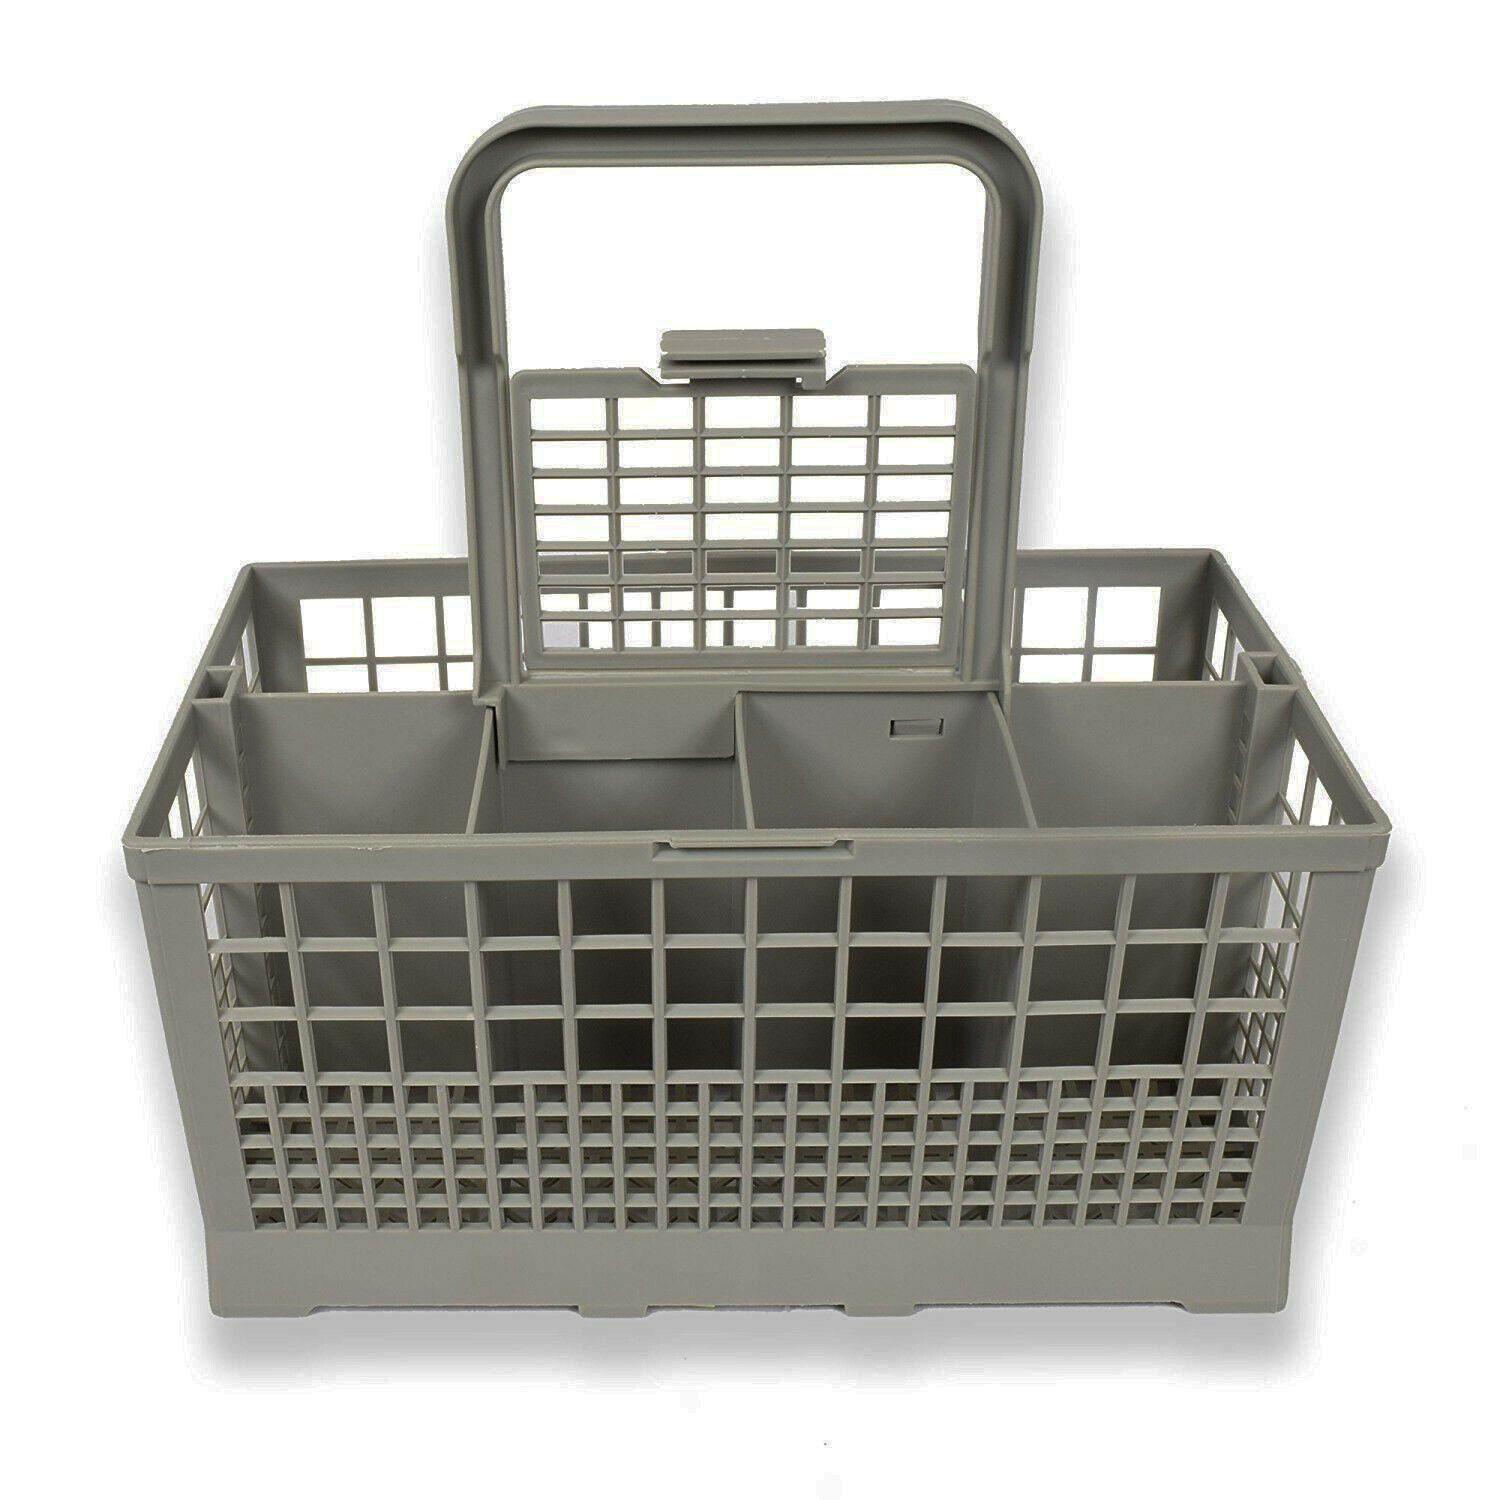 Dishwasher Cutlery Basket 240 x 140 x 120mm For SMEG Omega Miele Euromaid Sparesbarn